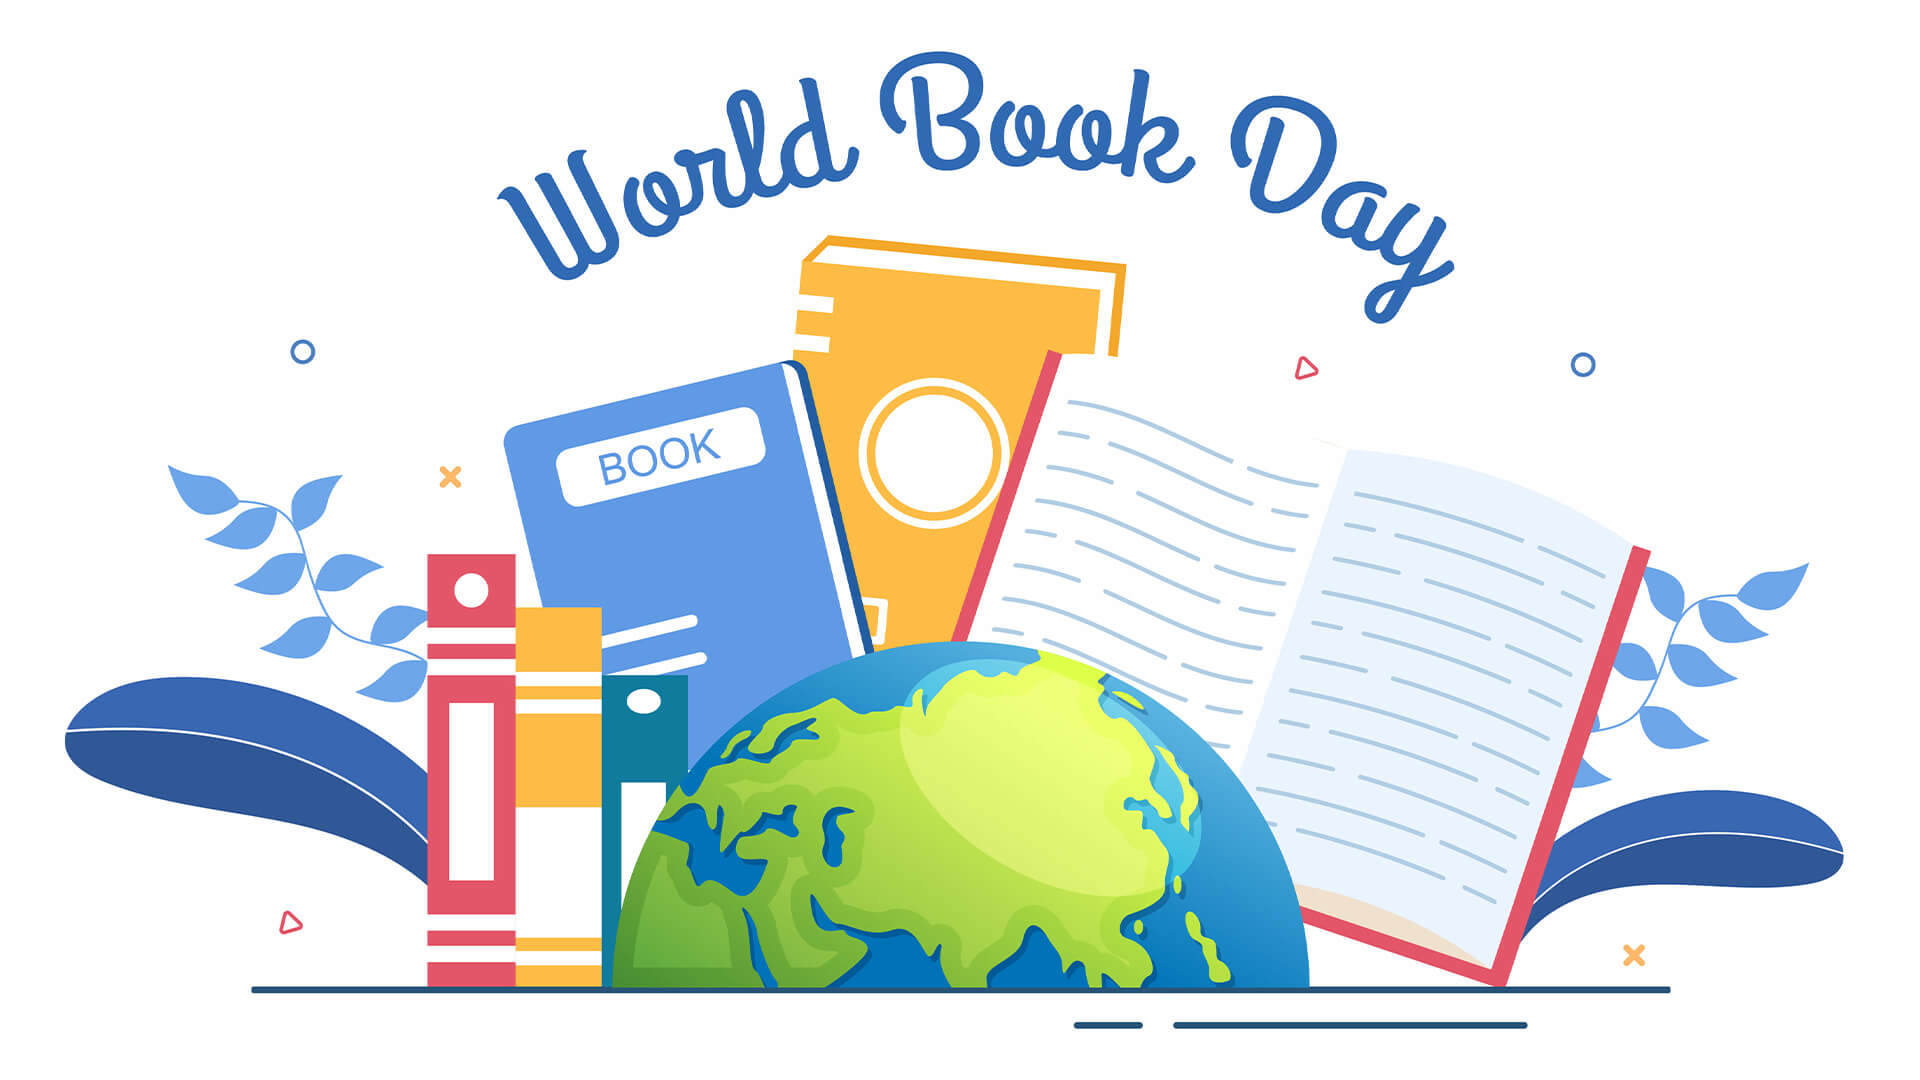 Happy World Book Day 2022!